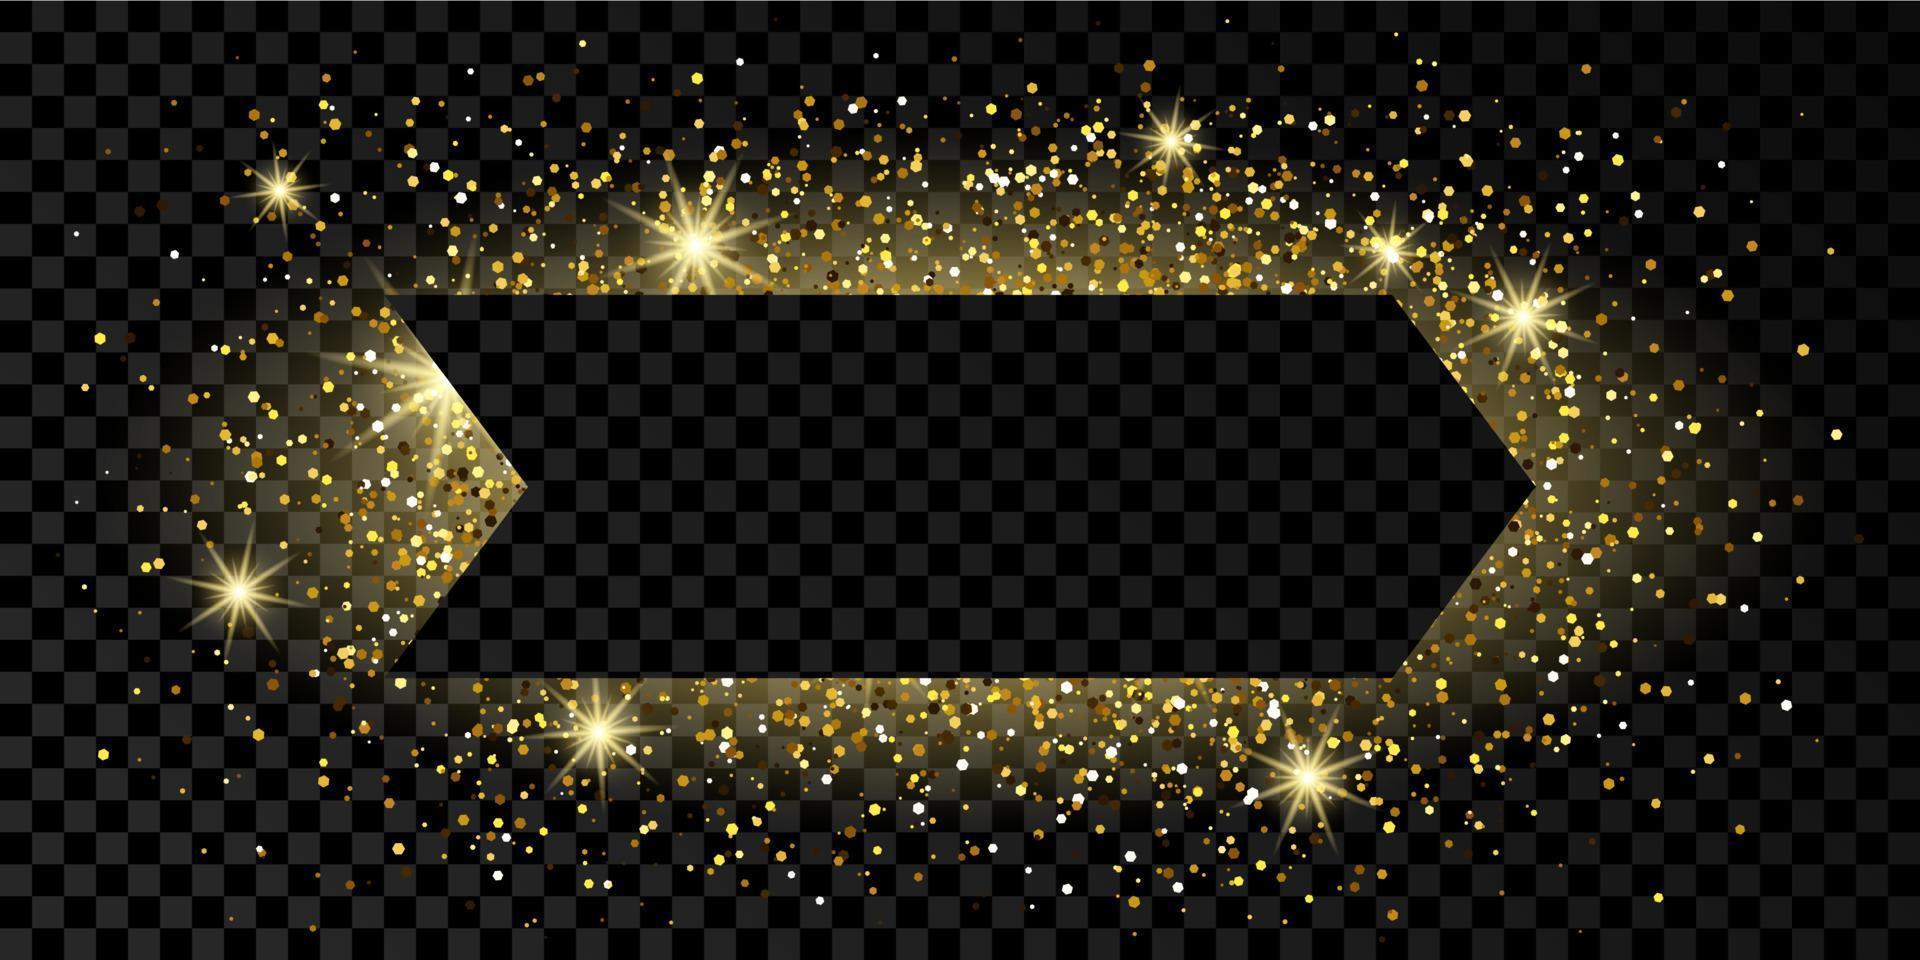 Golden arrow frame with glitter, sparkles and flares on dark vector